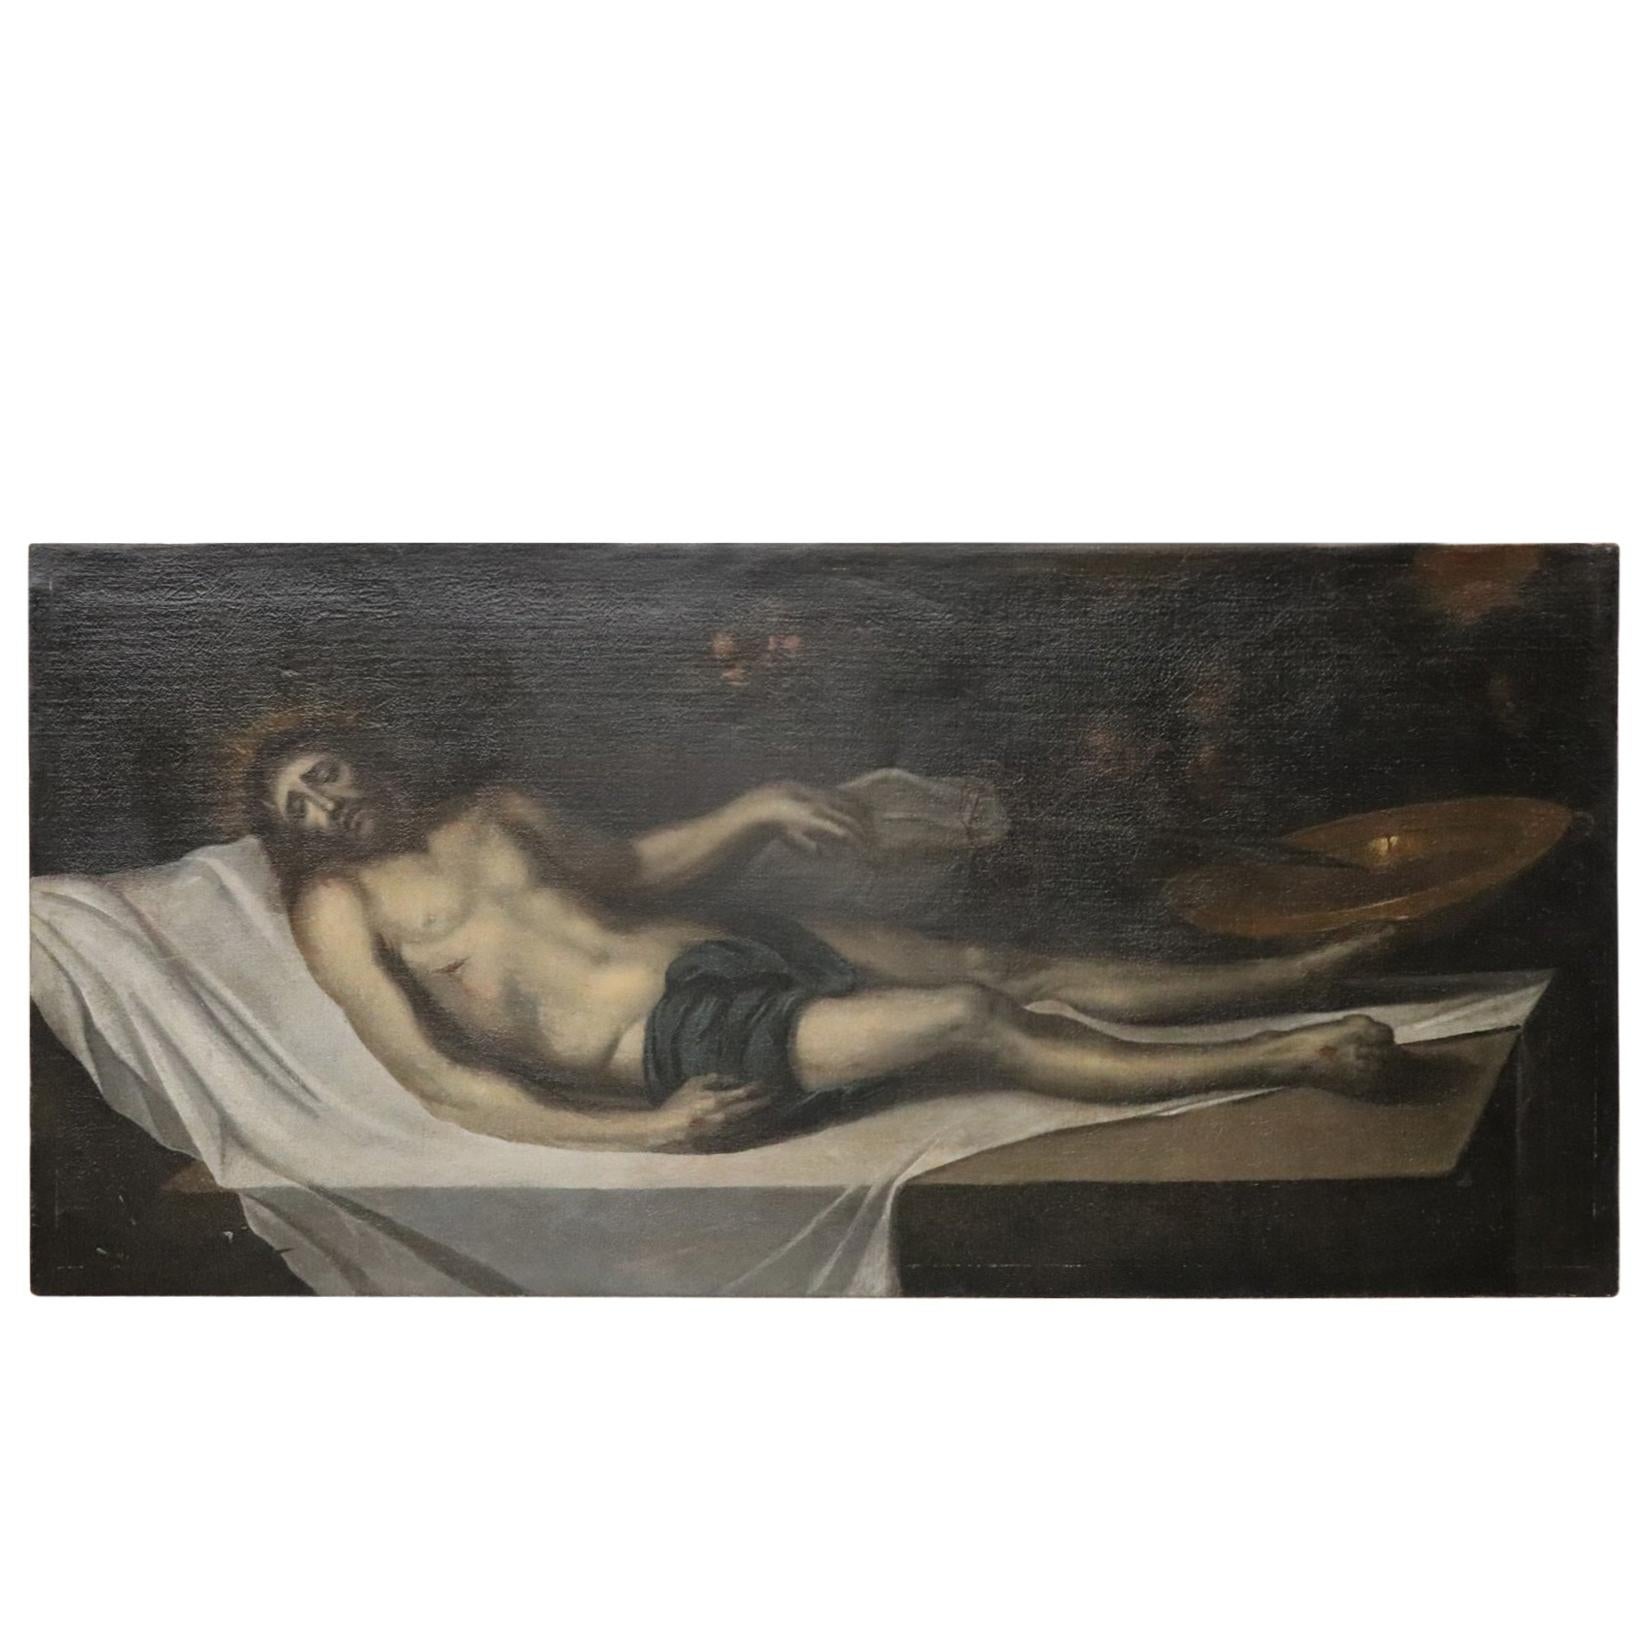 18th Century Italian Religious Oil Painting on Canvas, Christ Deposed